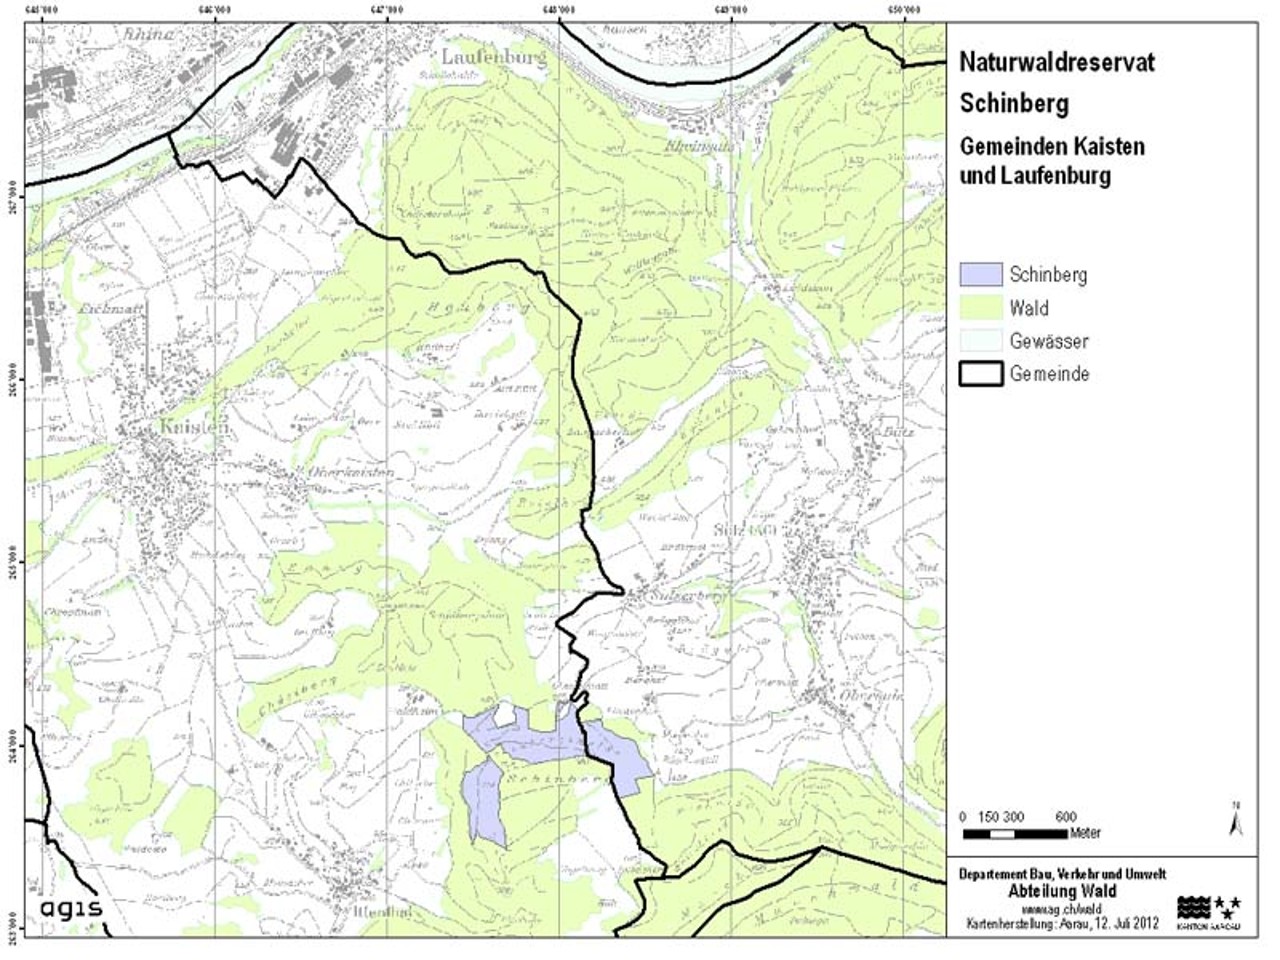 Kartenausschnitt des Naturwaldreservats Schinberg